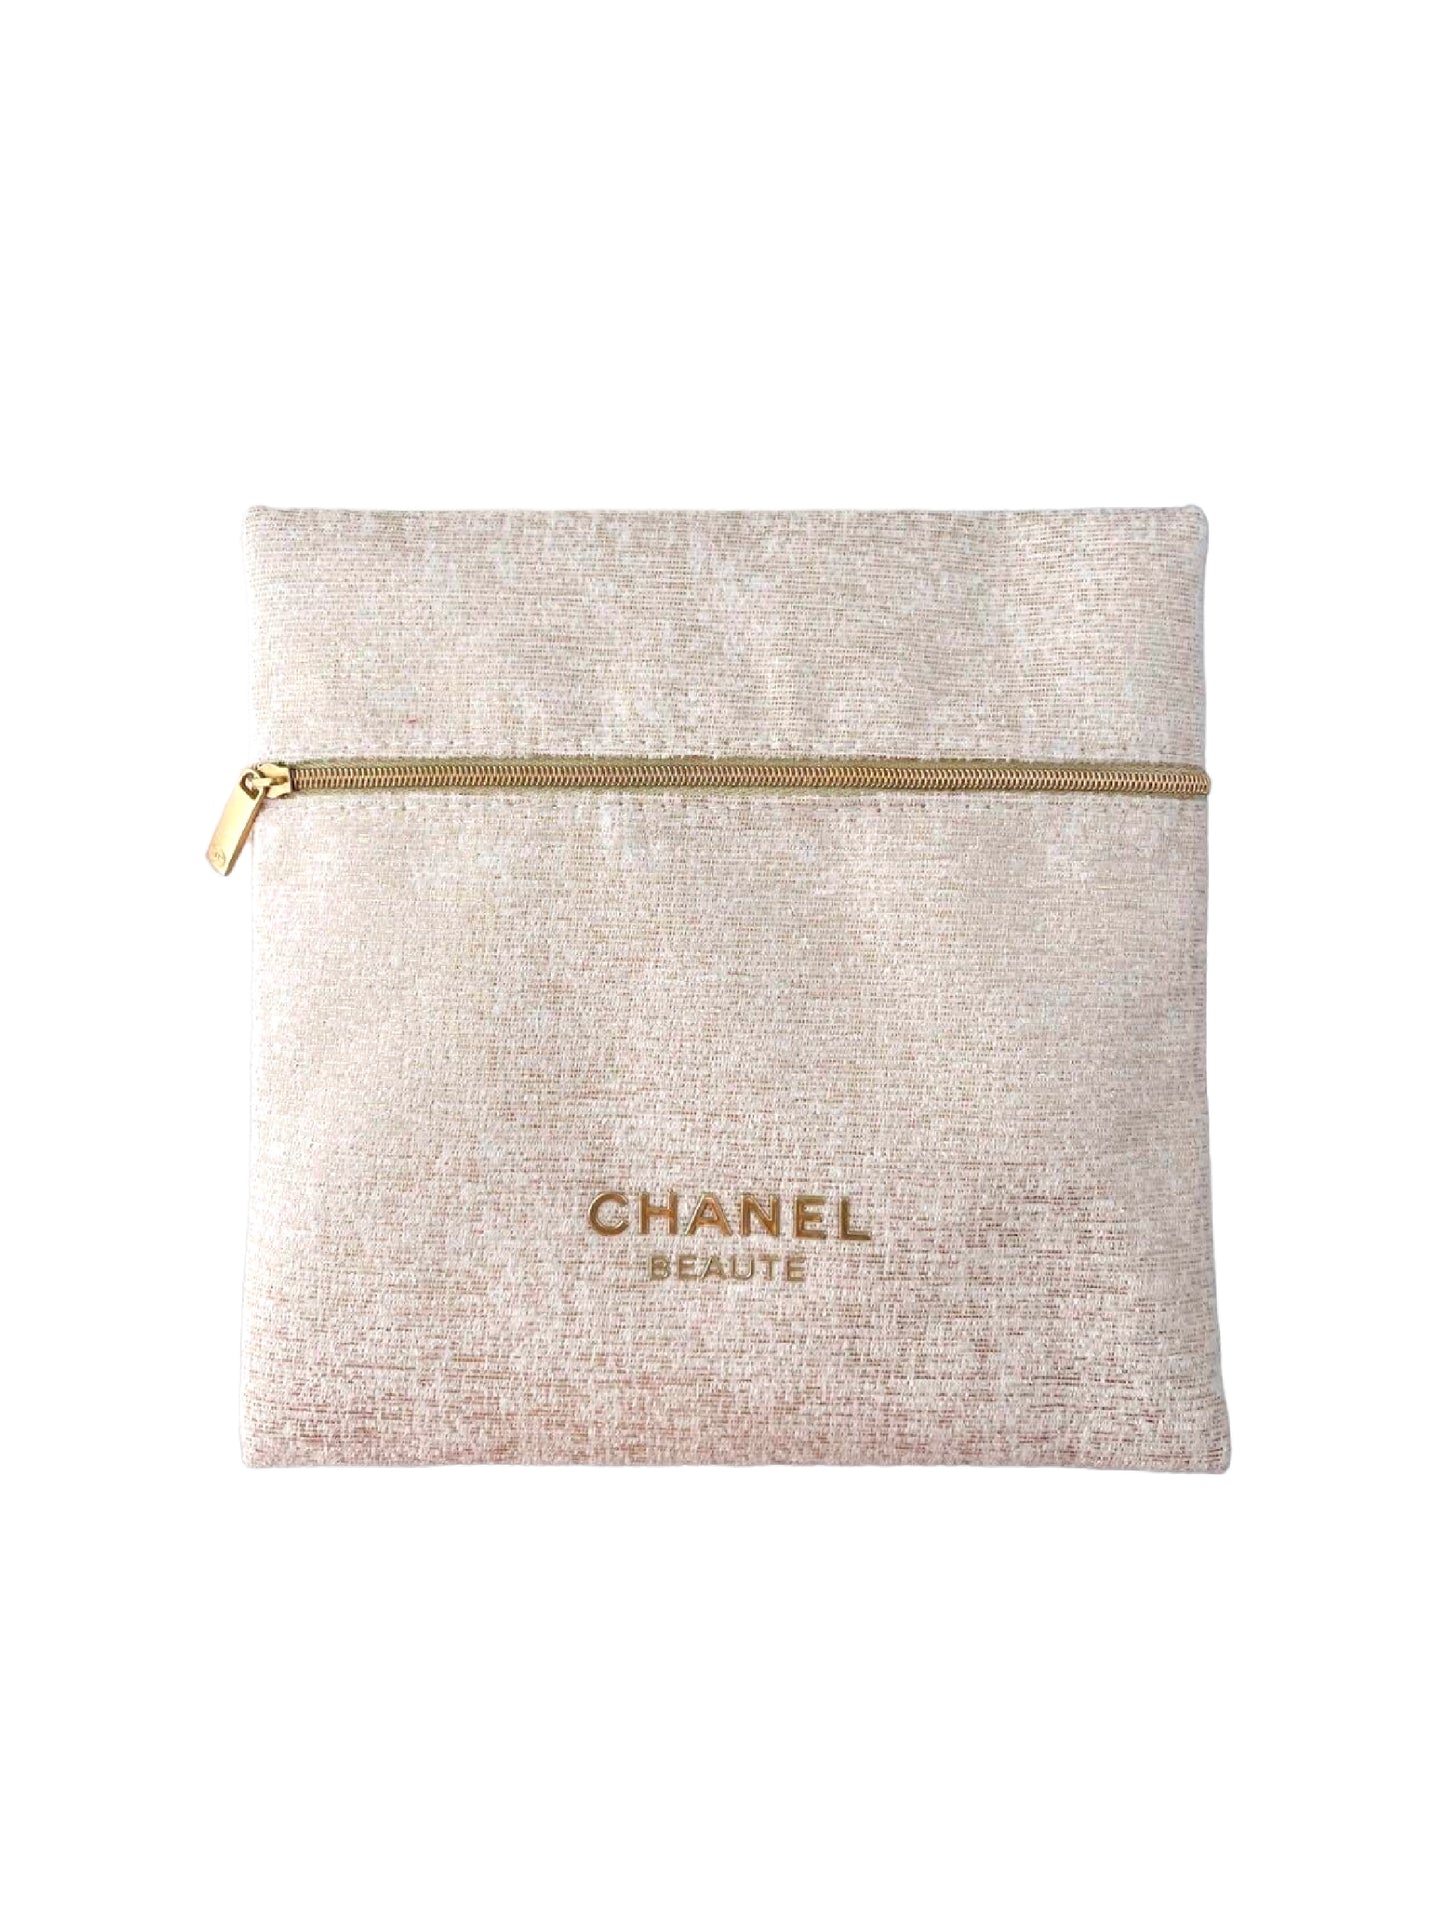 Chanel Beaute Makeup Bag (Pouch) - White